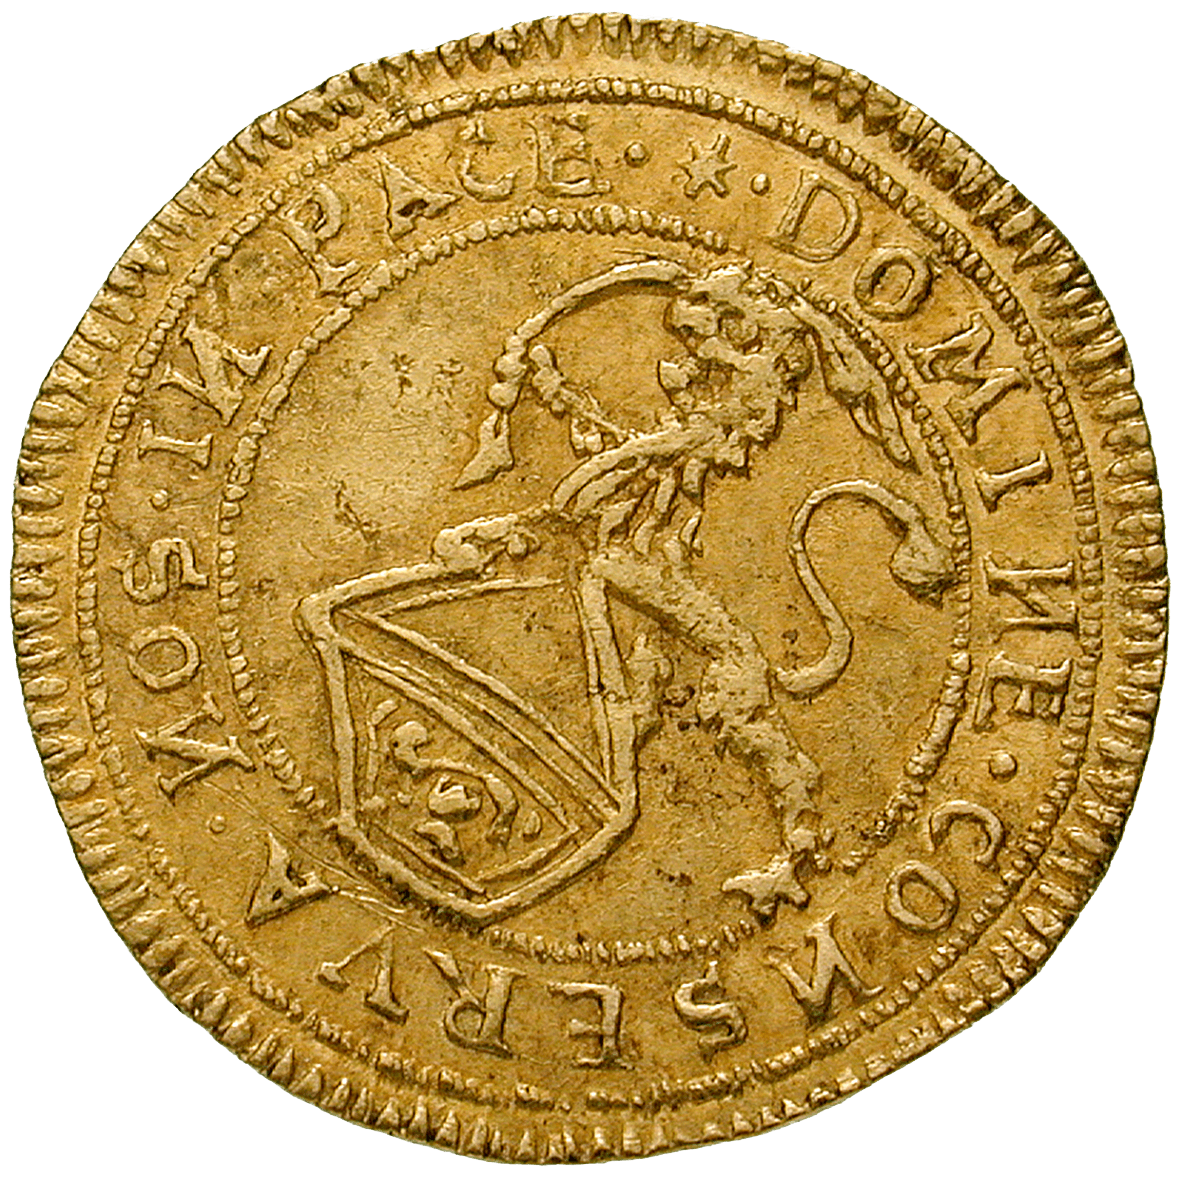 Republic of Zurich, 1/2 Ducat 1649 (obverse)